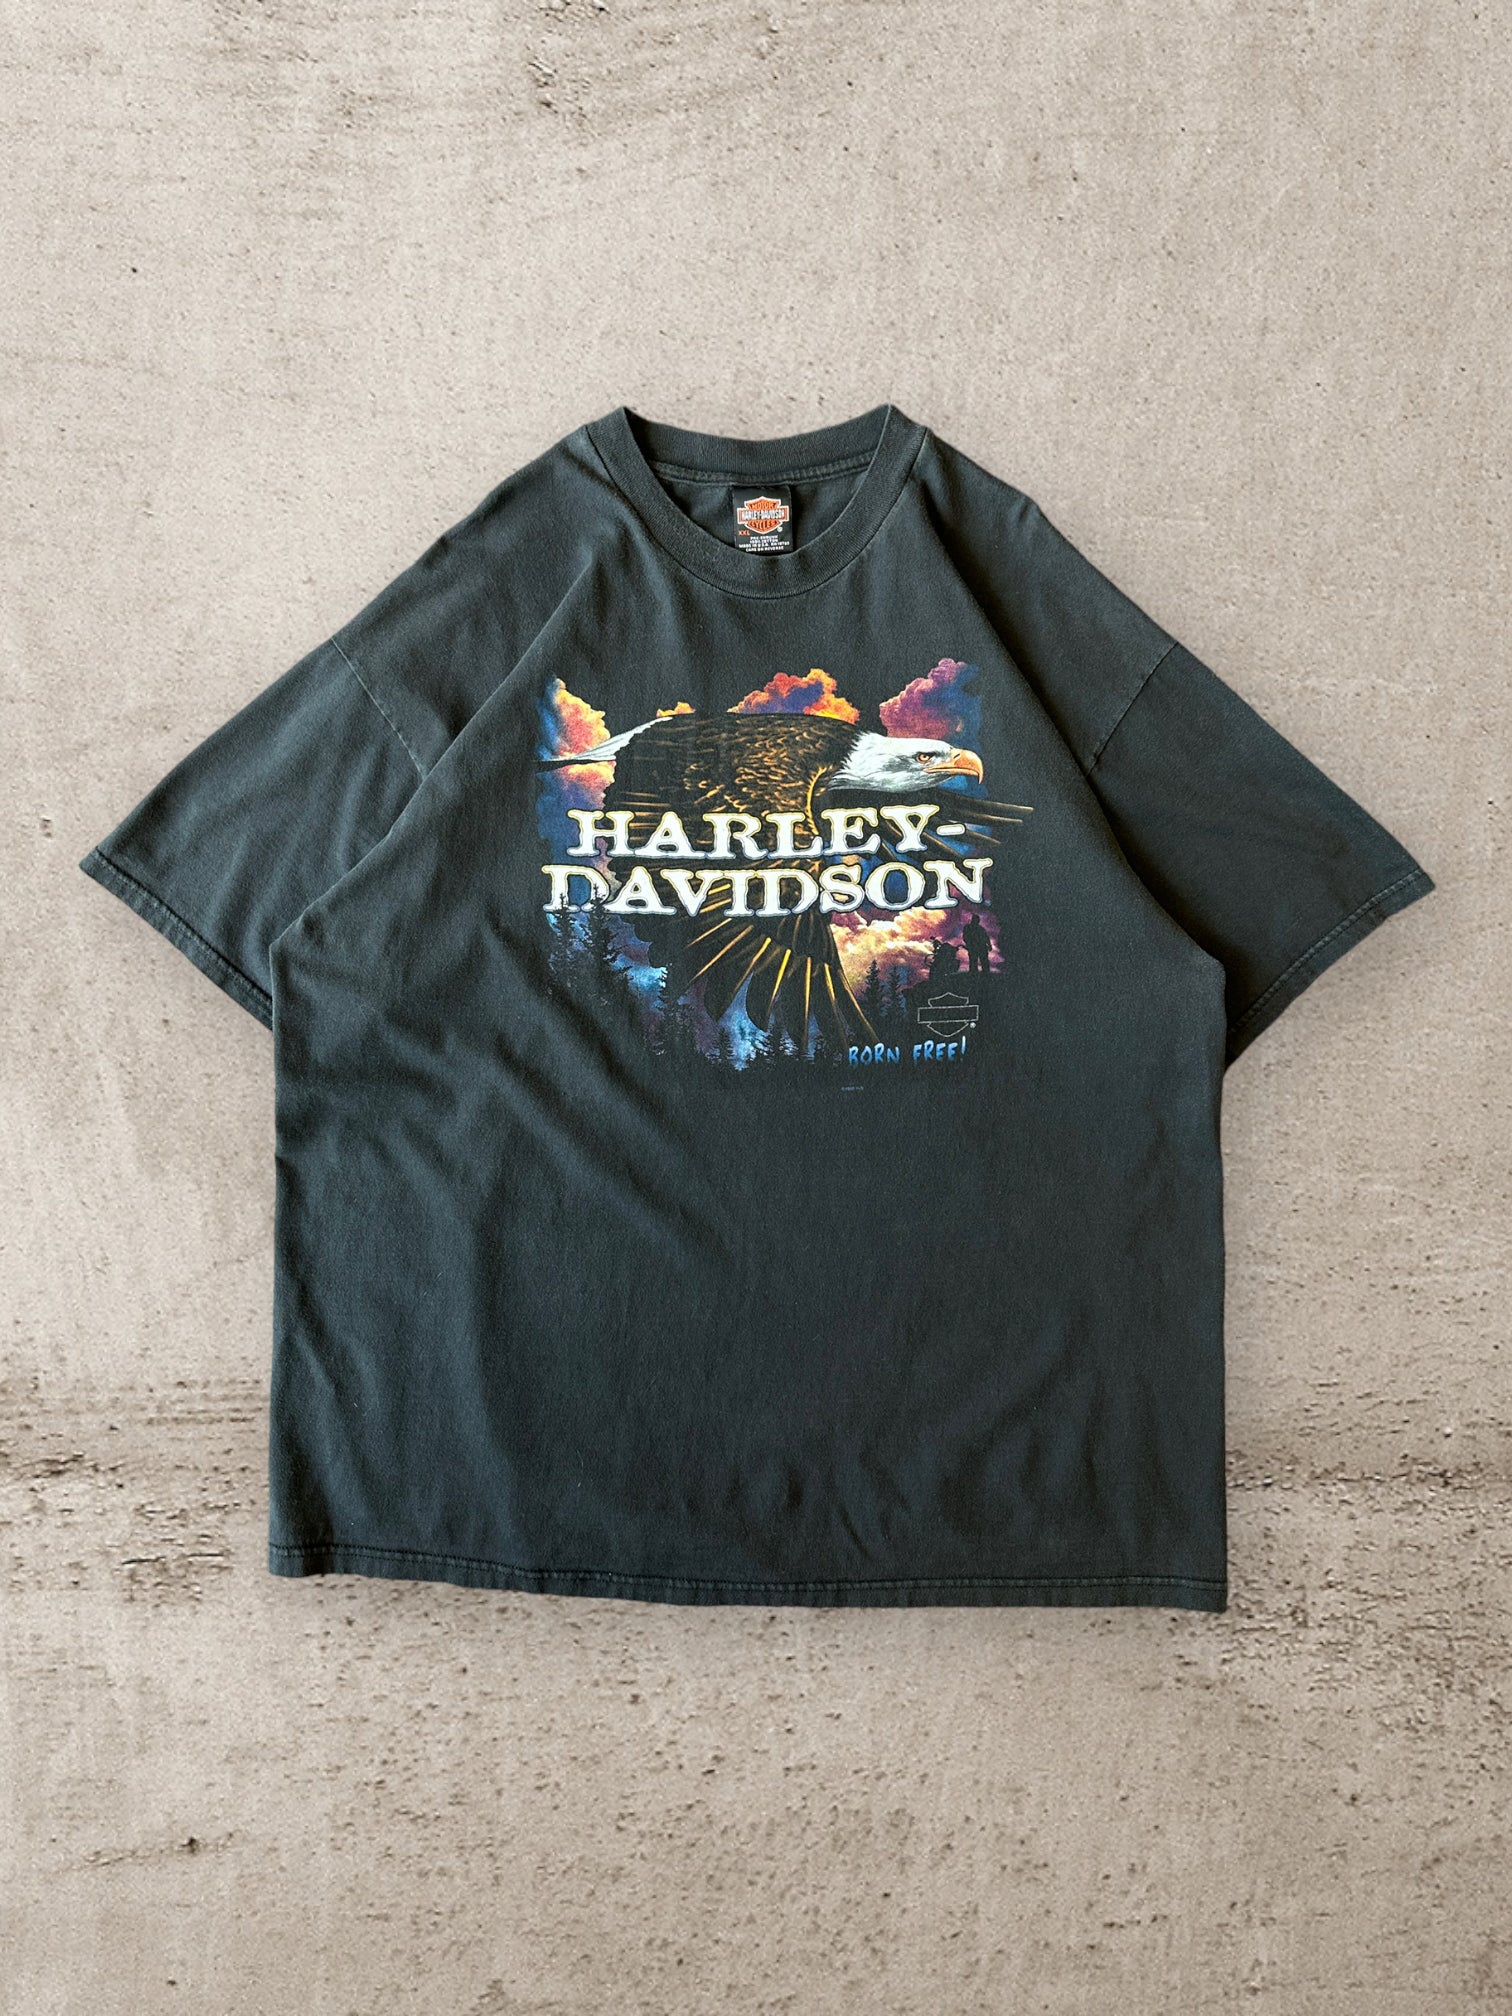 90s Harley Davidson Born Free Eagle T-Shirt - XXL